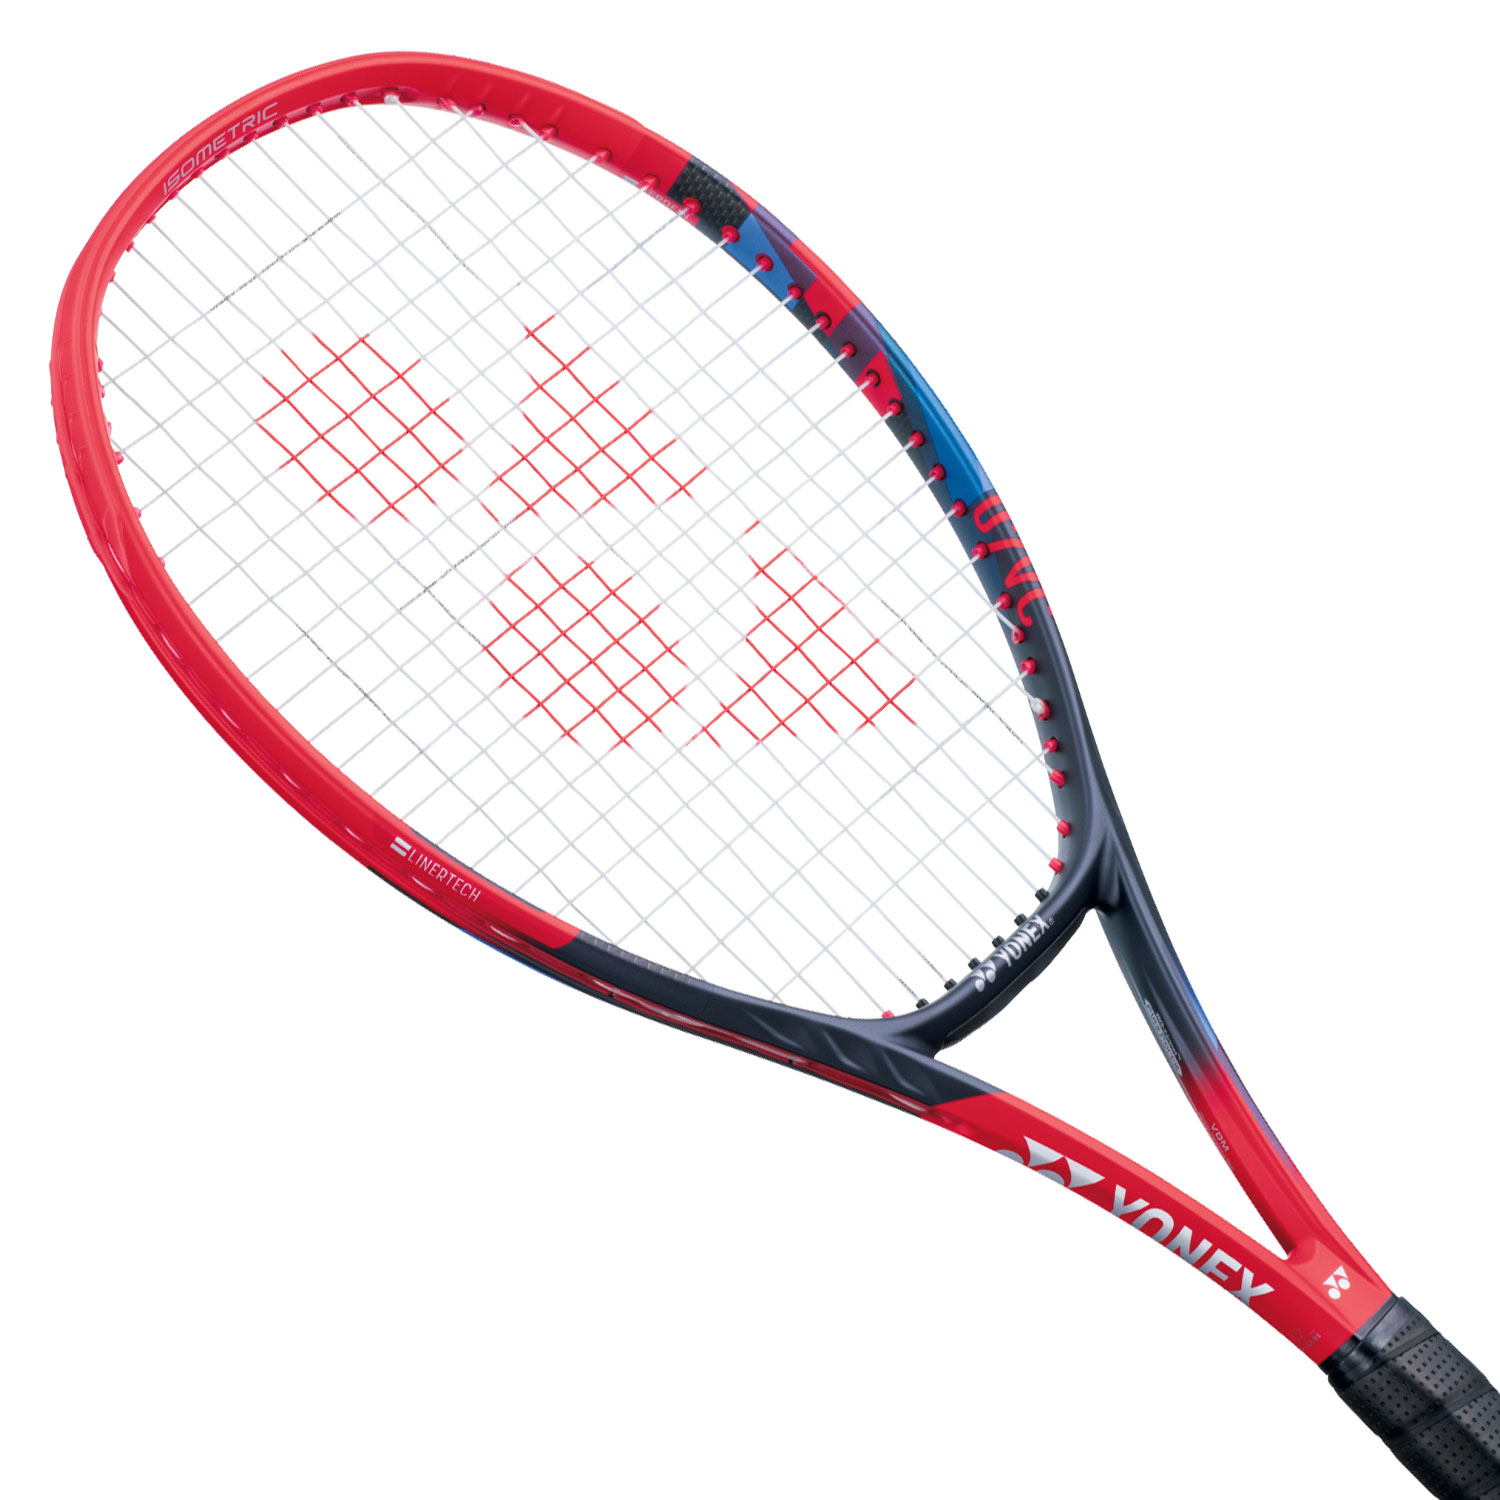 Buy tennis rackets, yonex, vcore online tennis rackets Racket Kingdom